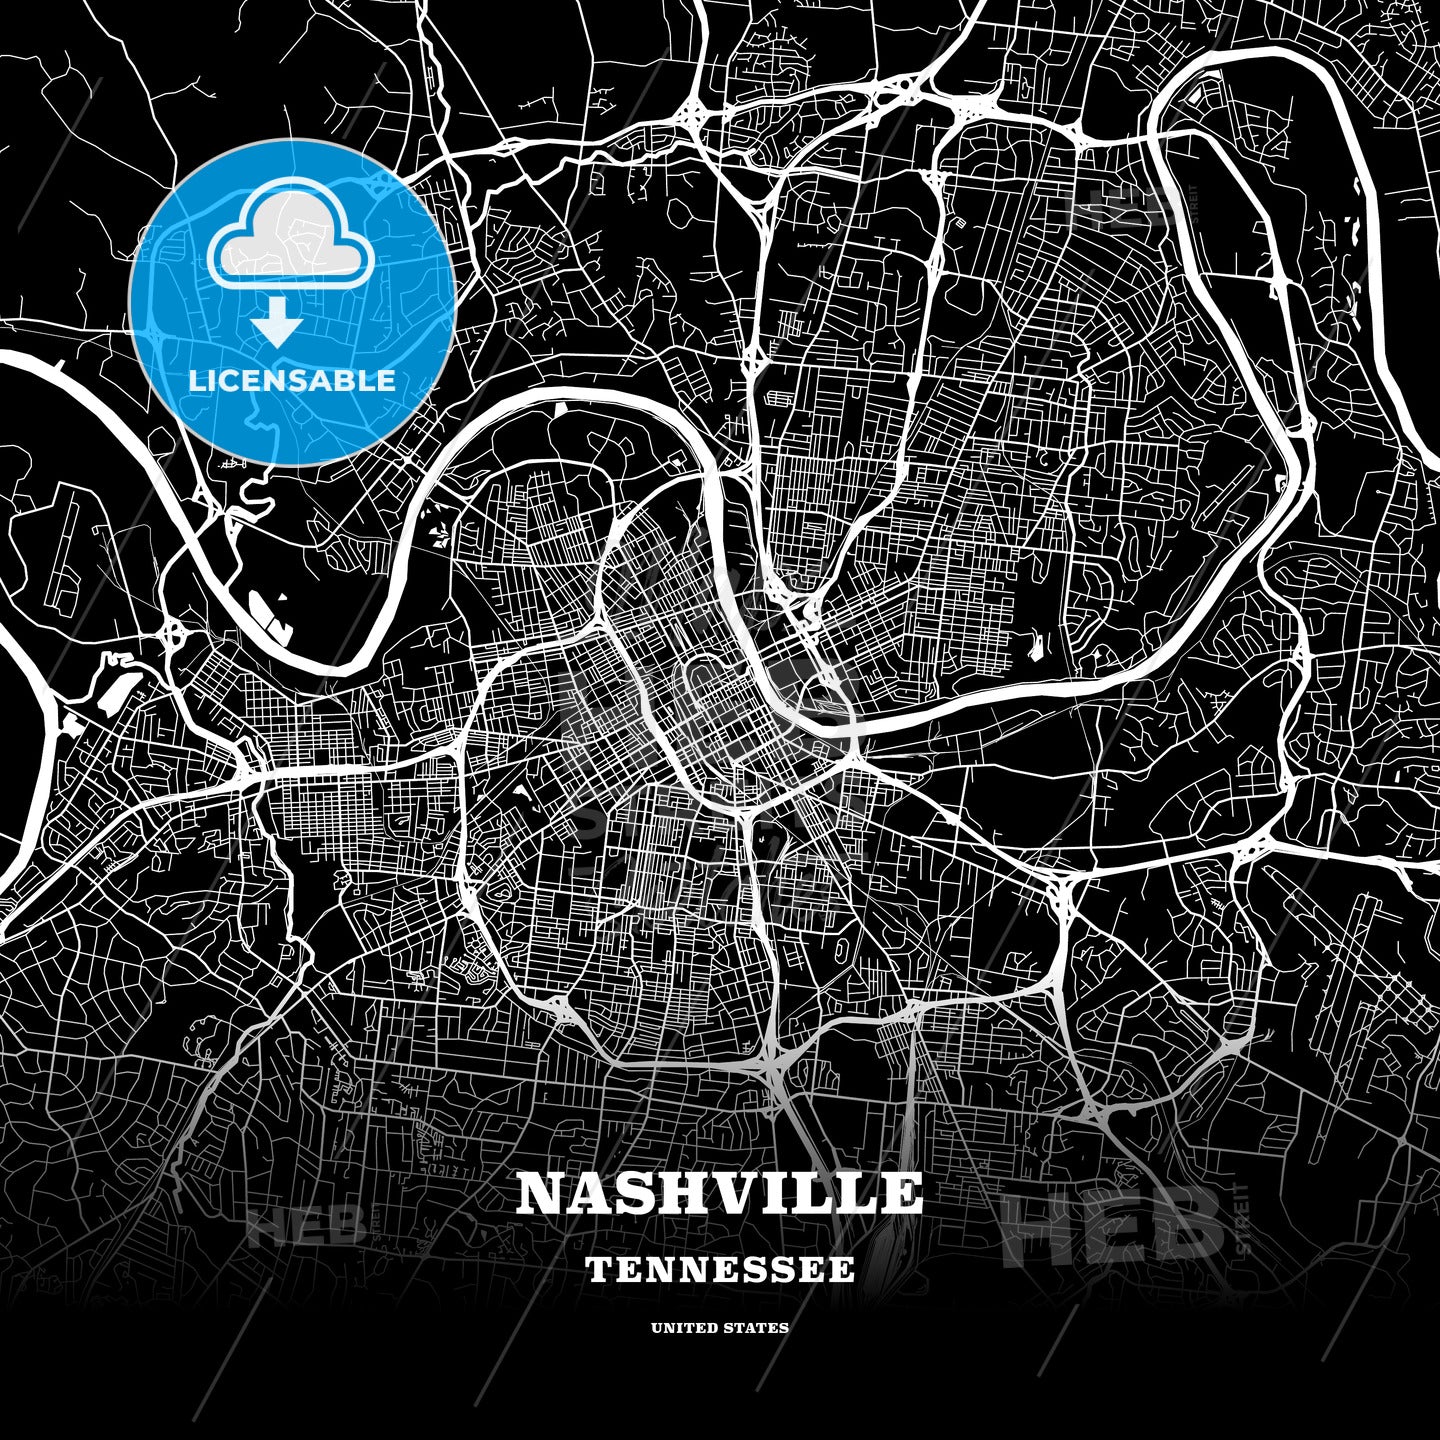 Nashville, Tennessee, USA map